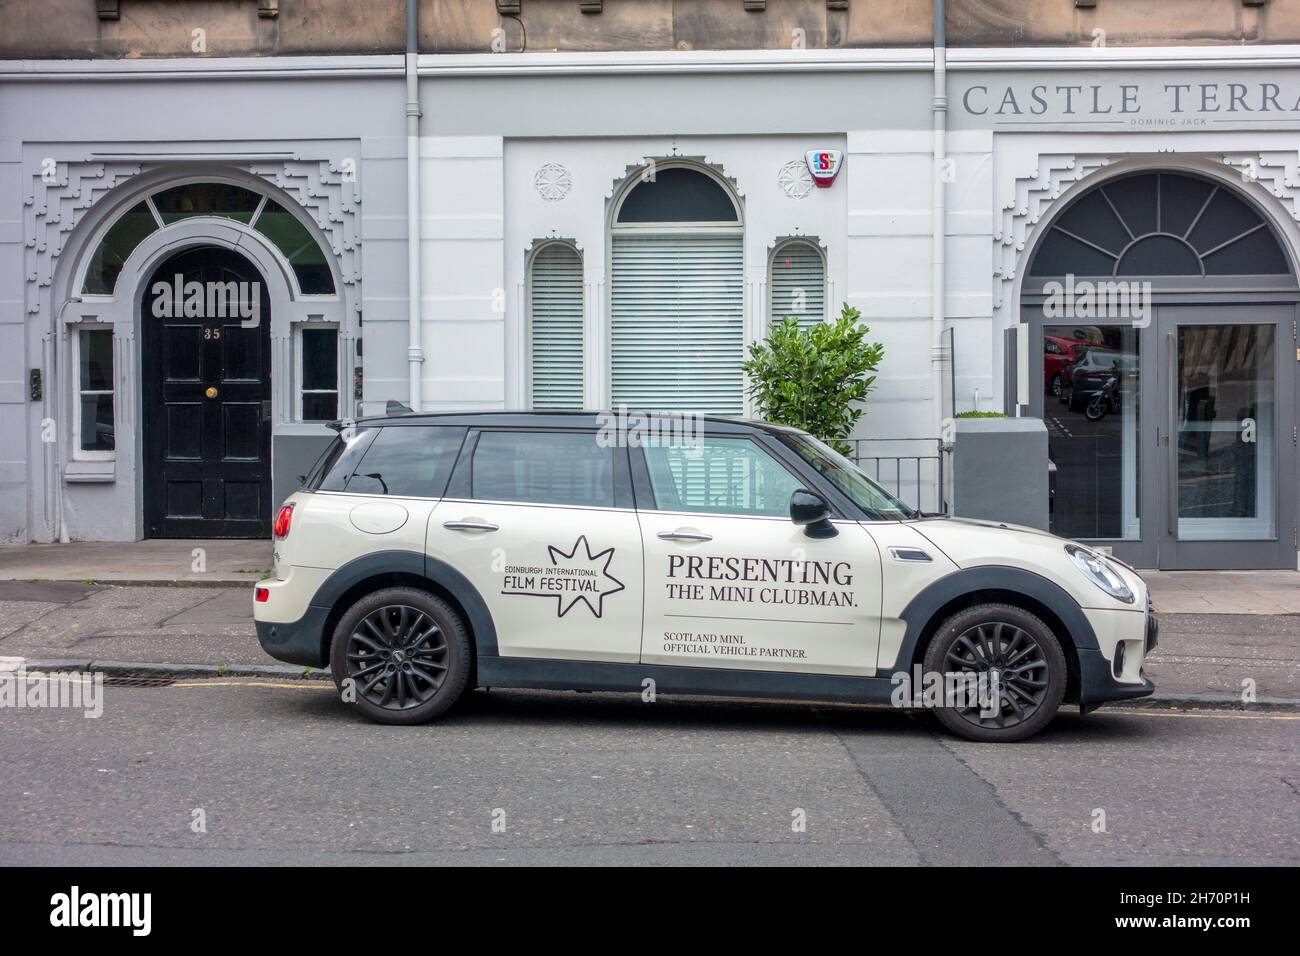 2017 Mini Clubman Edinburgh International Film Festival Vehicle Partnership con Scotland Mini parcheggiato a Castle Terrace Edinburgh Scozia Foto Stock